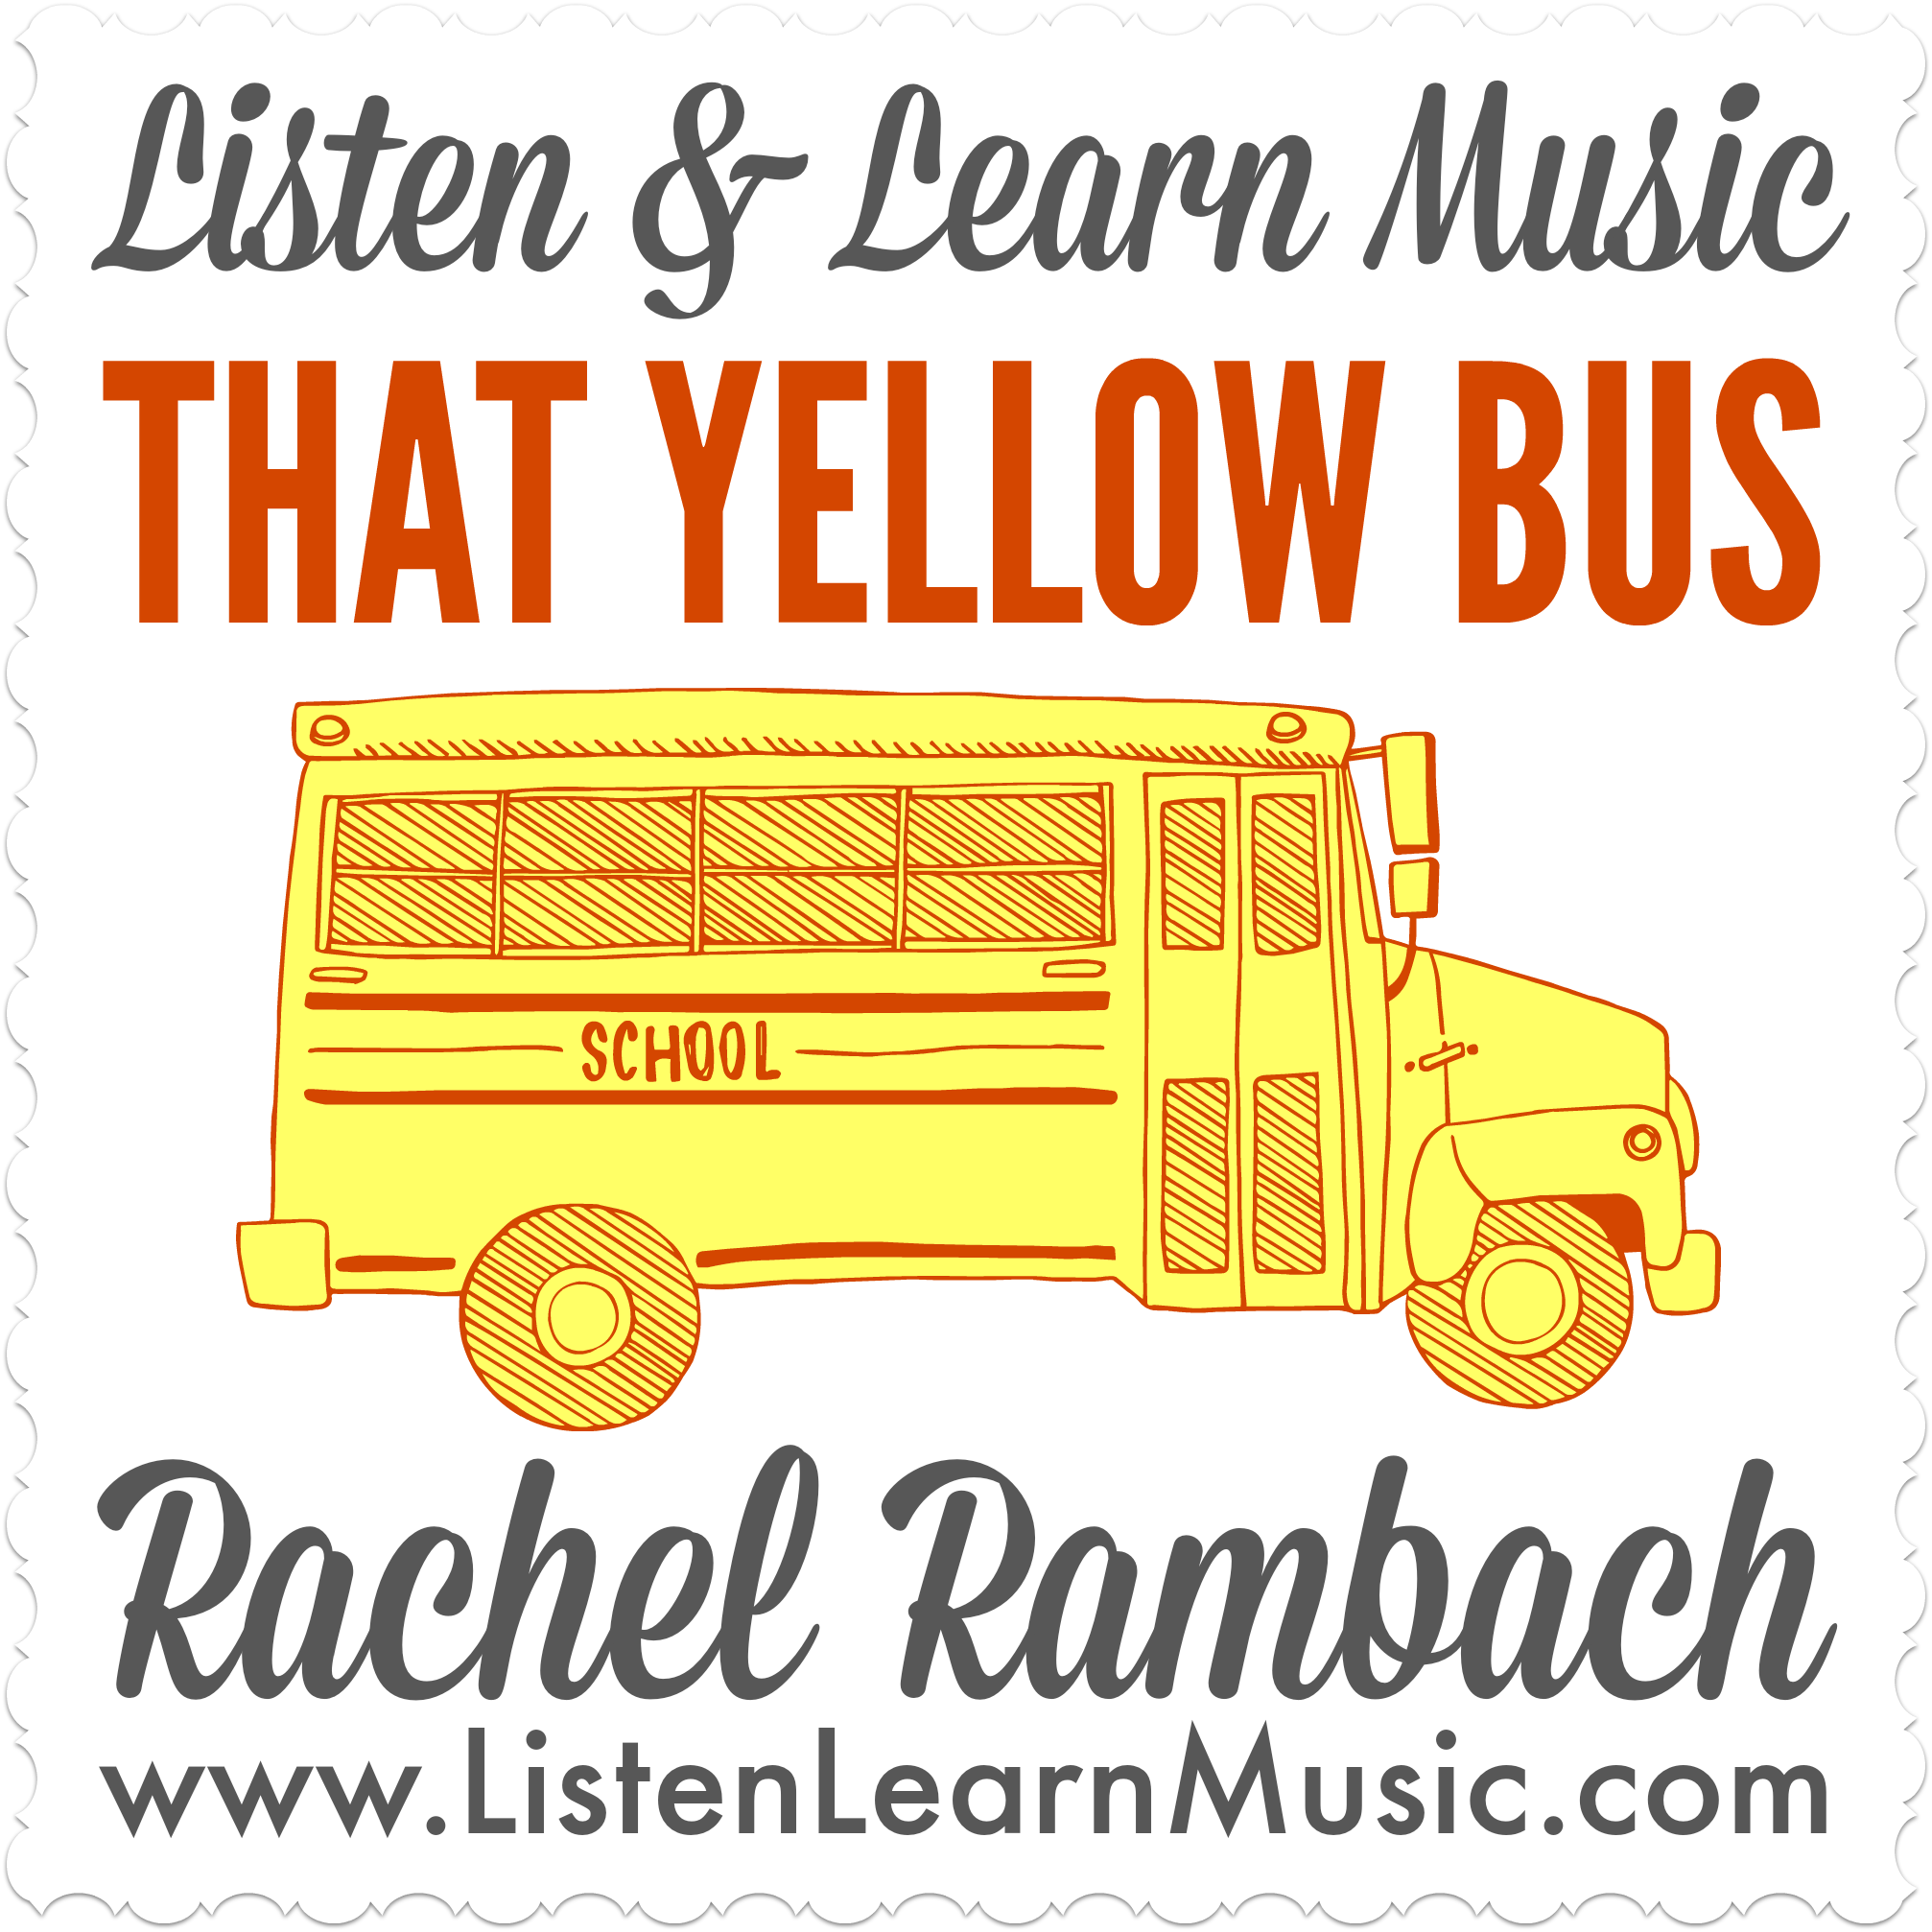 That Yellow Bus | Listen & Learn Music